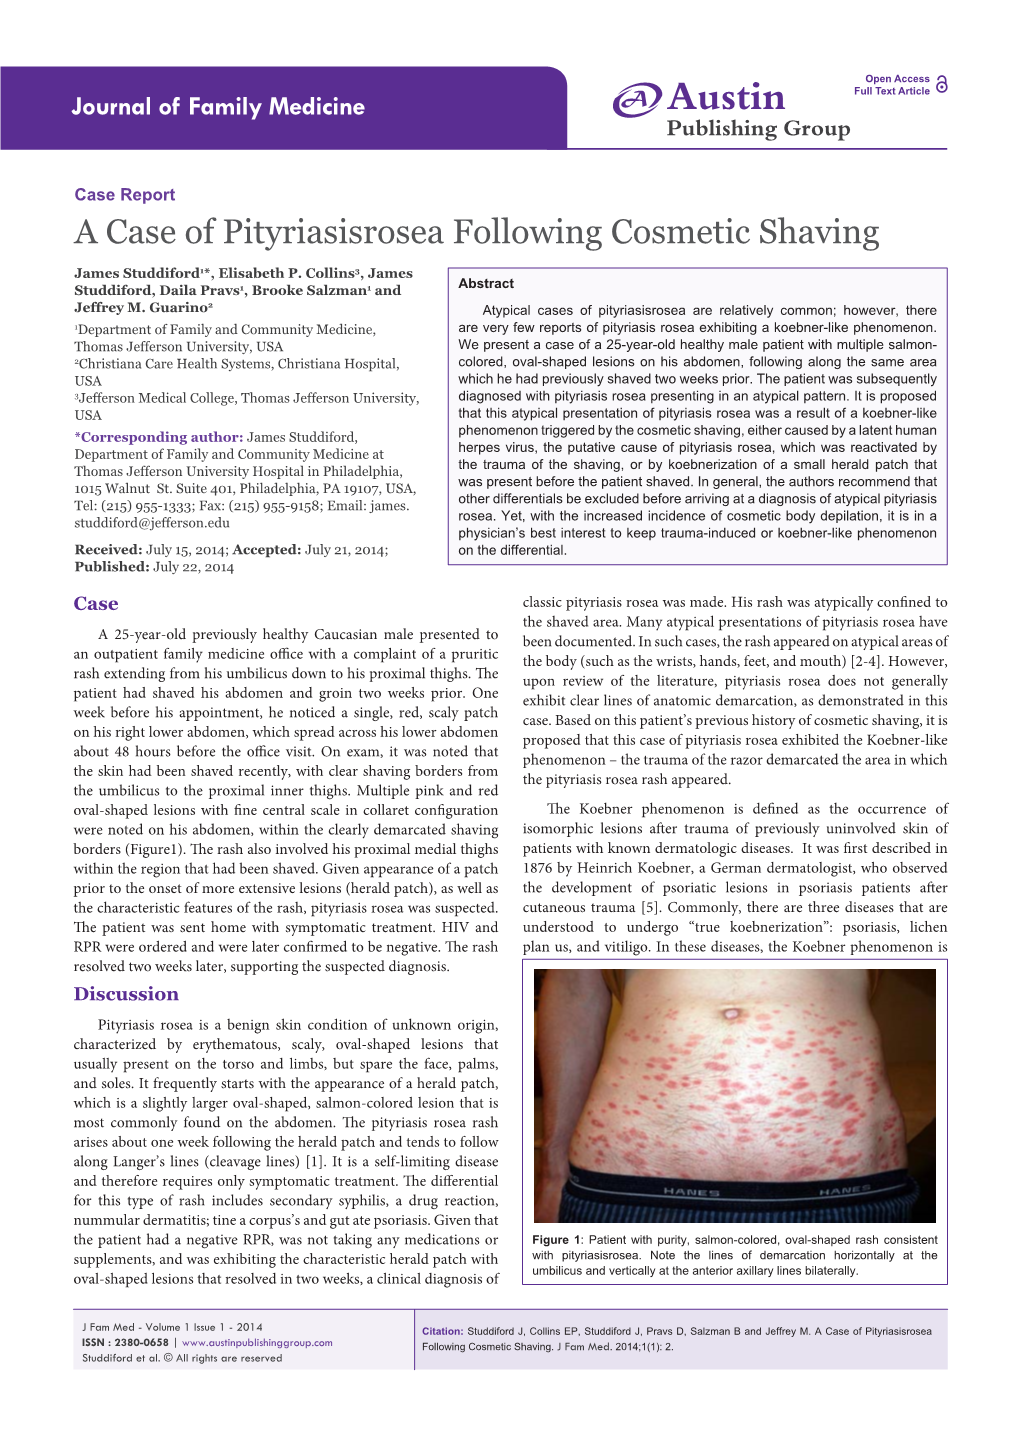 A Case of Pityriasisrosea Following Cosmetic Shaving